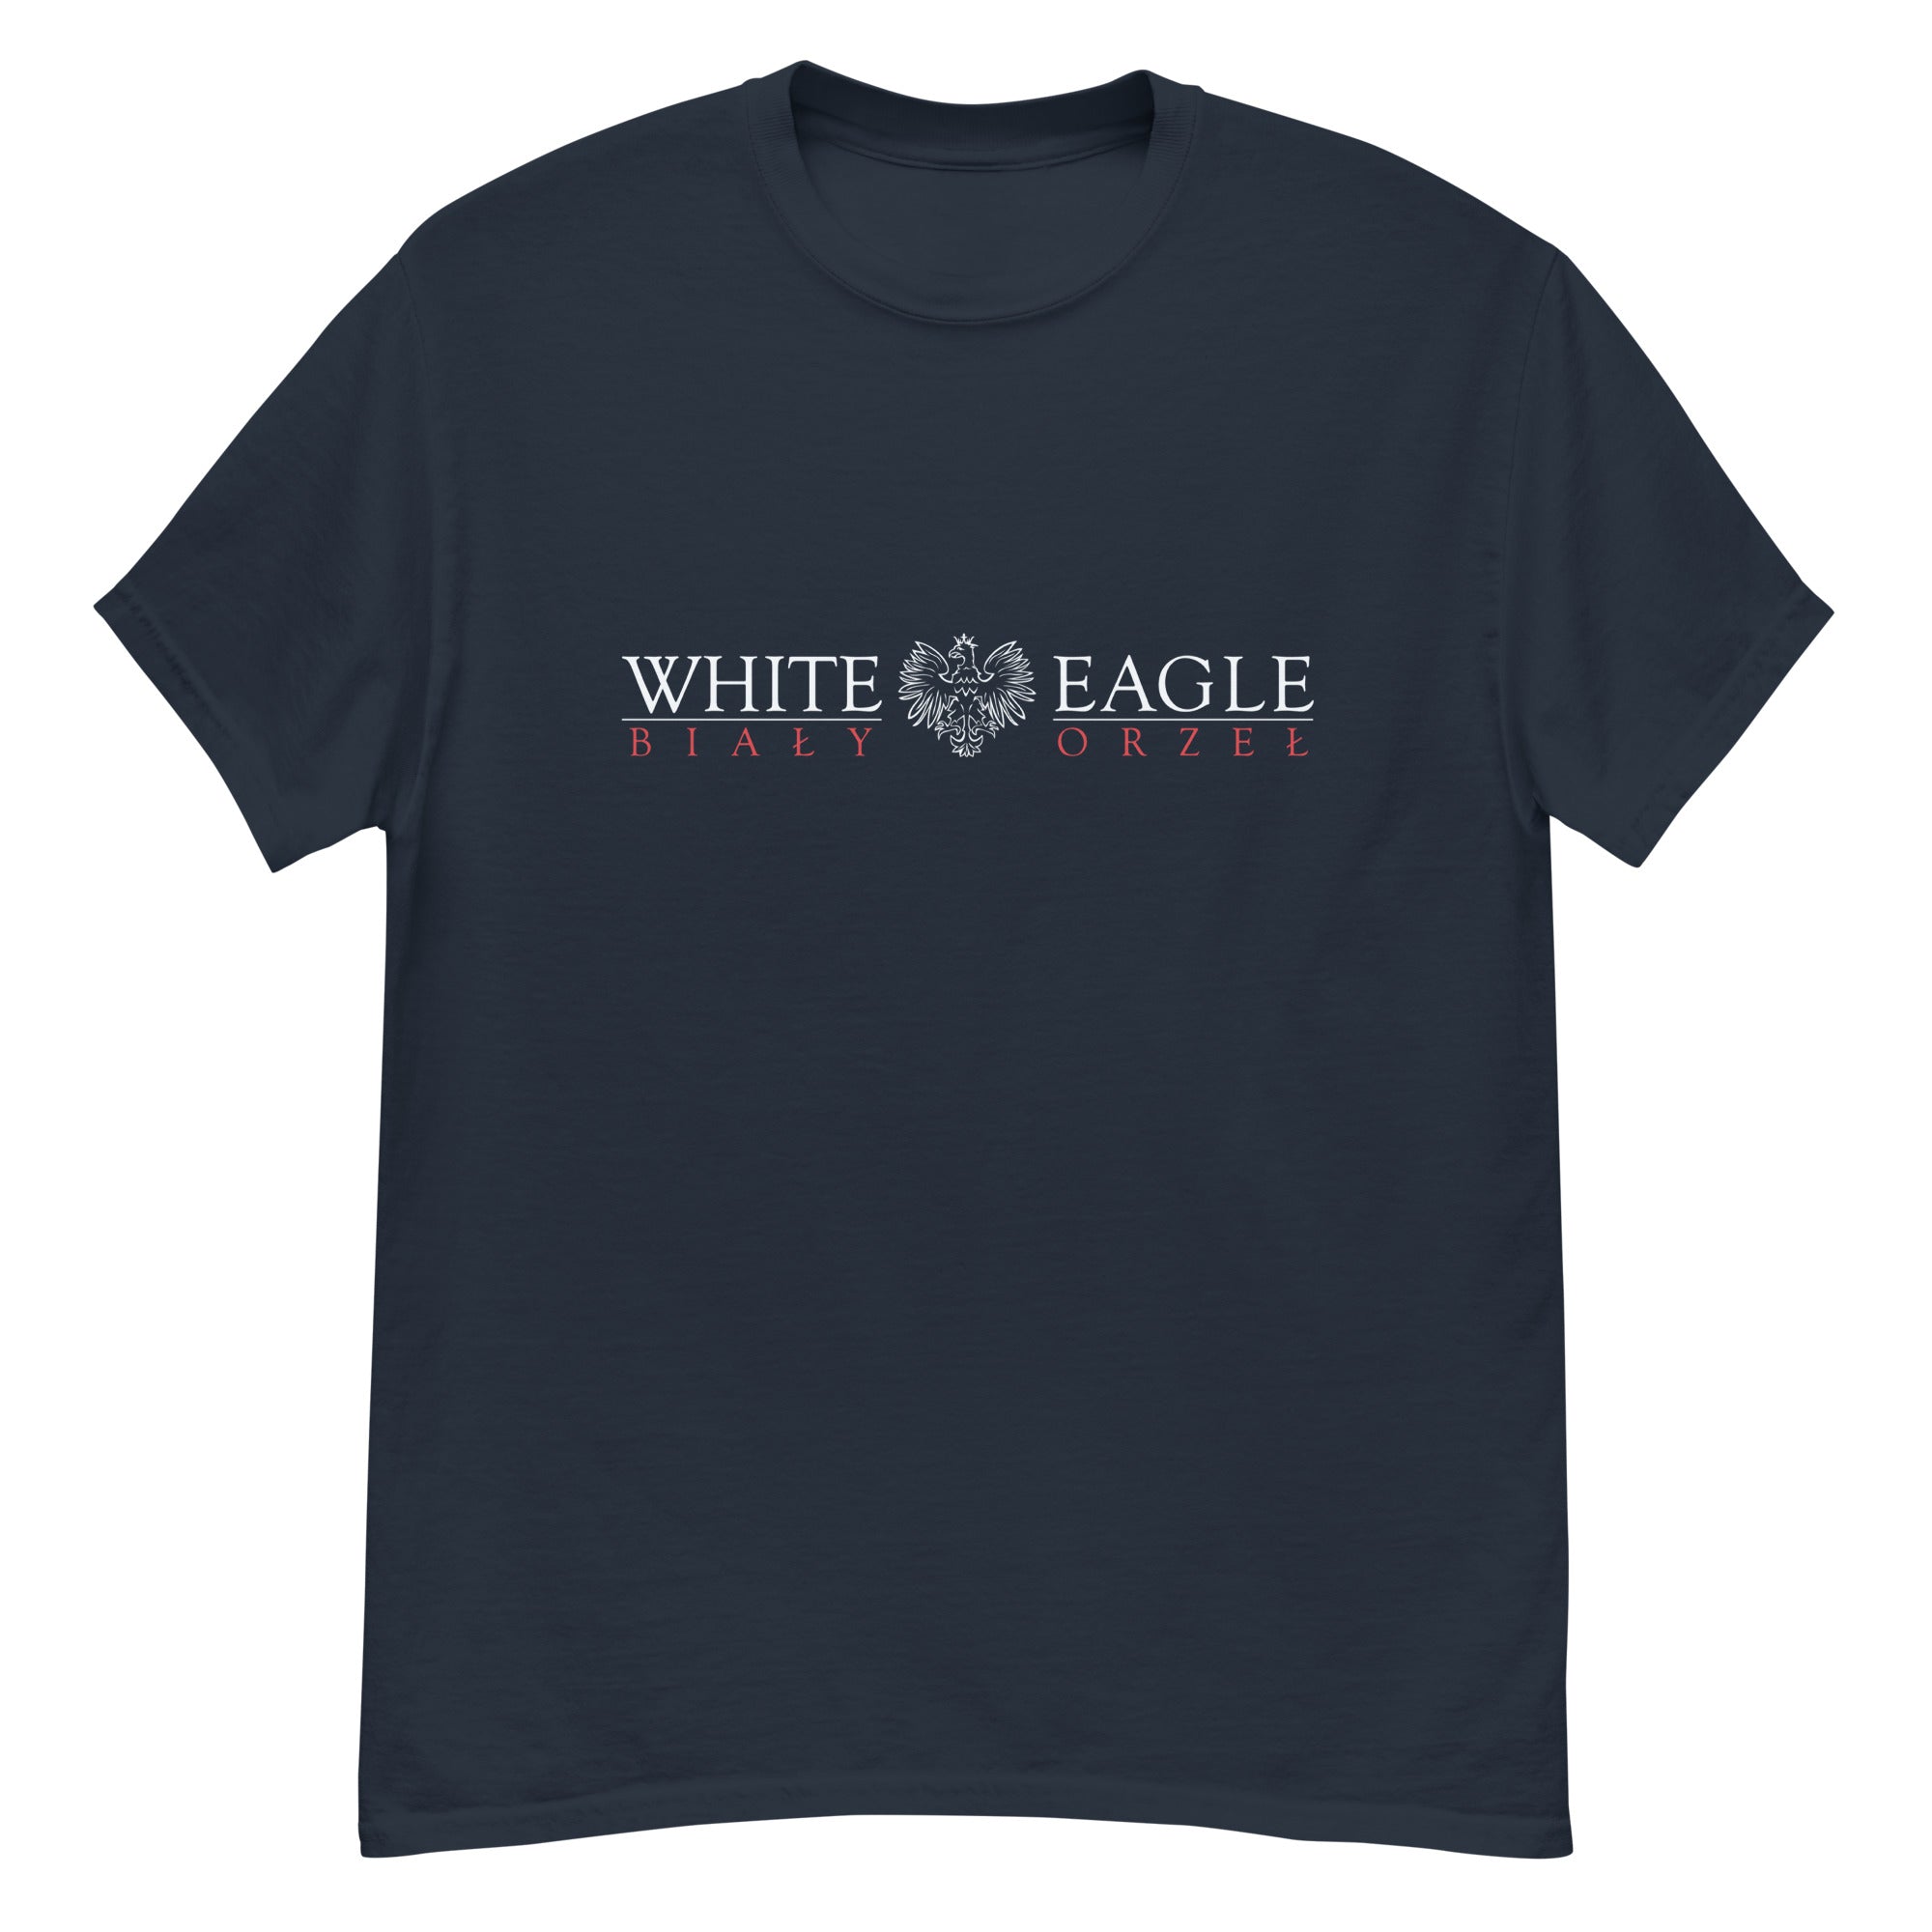 Bialy Orzel, White Eagle Short Sleeve Tshirt